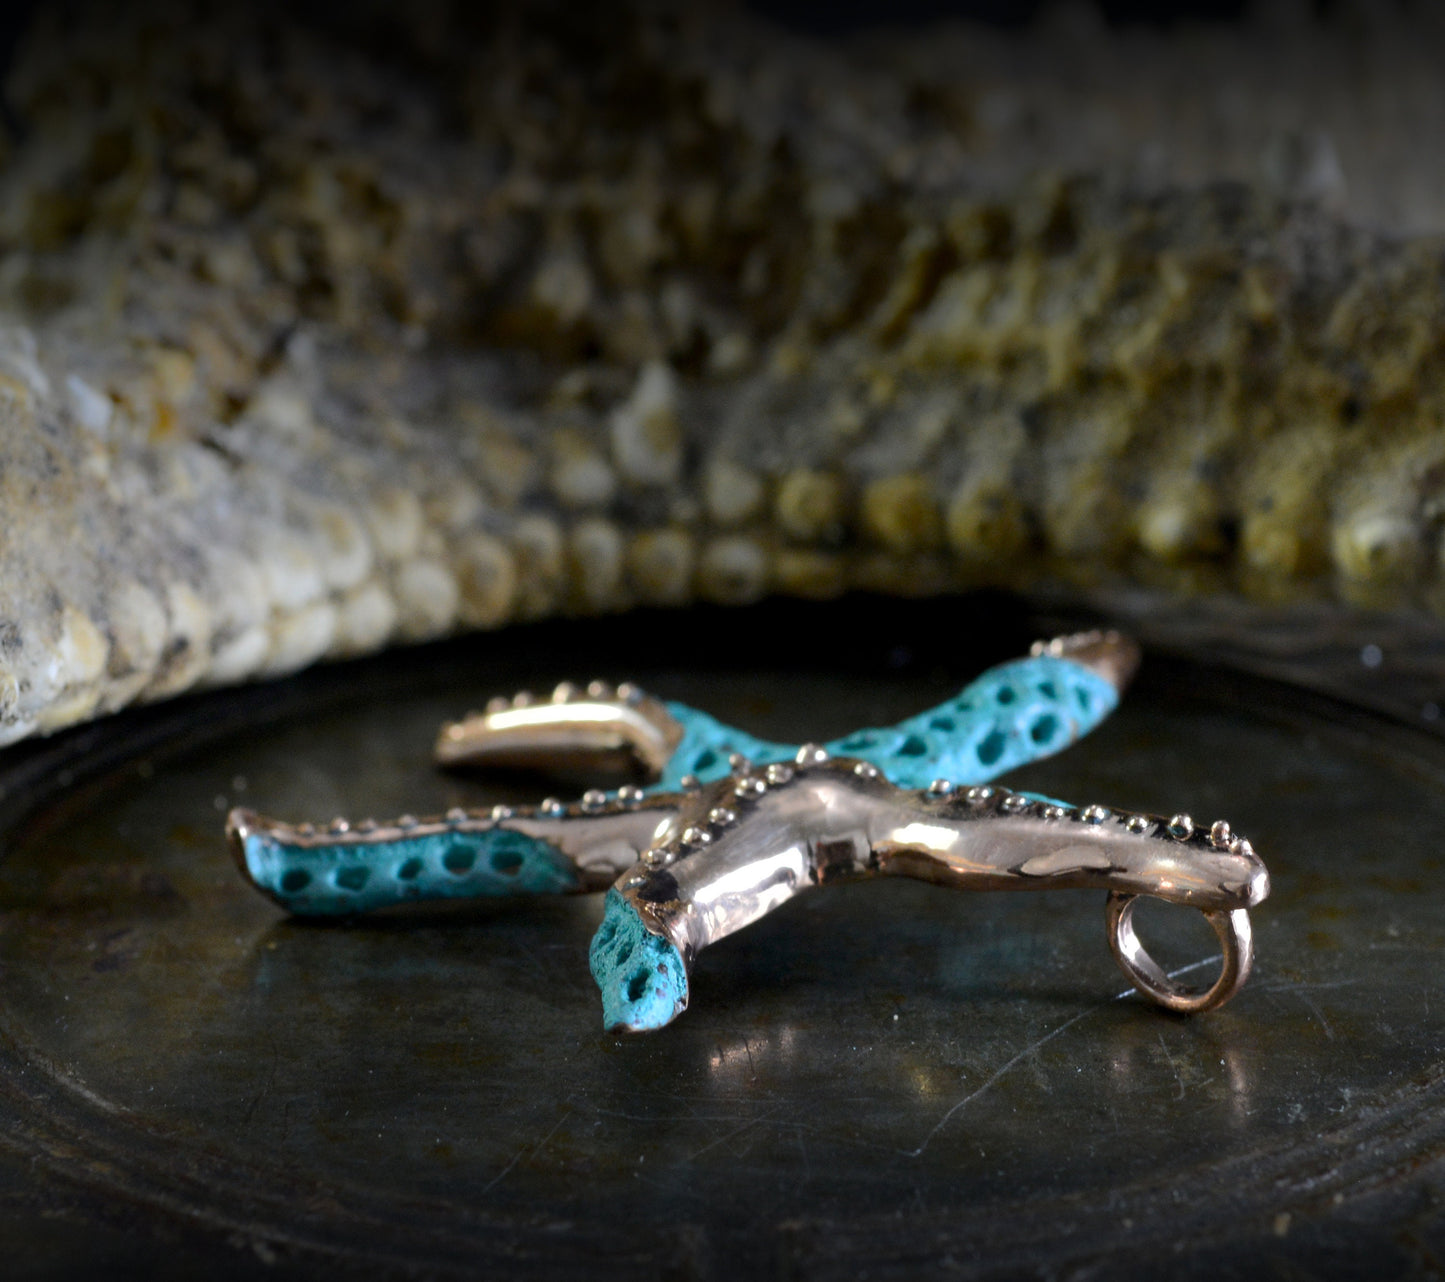 Handmade starfish pendant, Artistic bronze pendant and green or black patinas, Sea jewelry